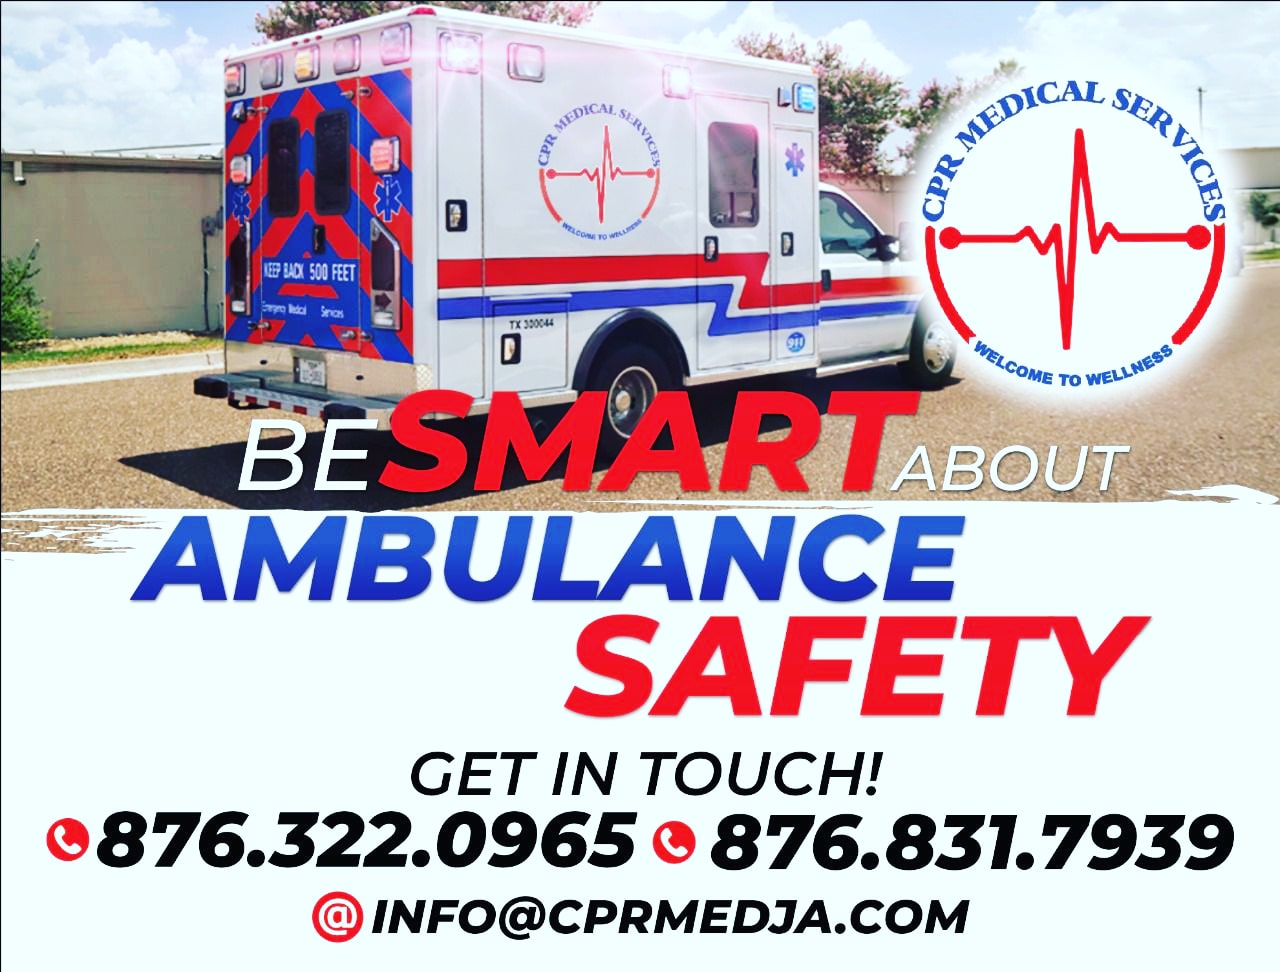 CPR Medical Services - Ambulance Service-Emergency Medical